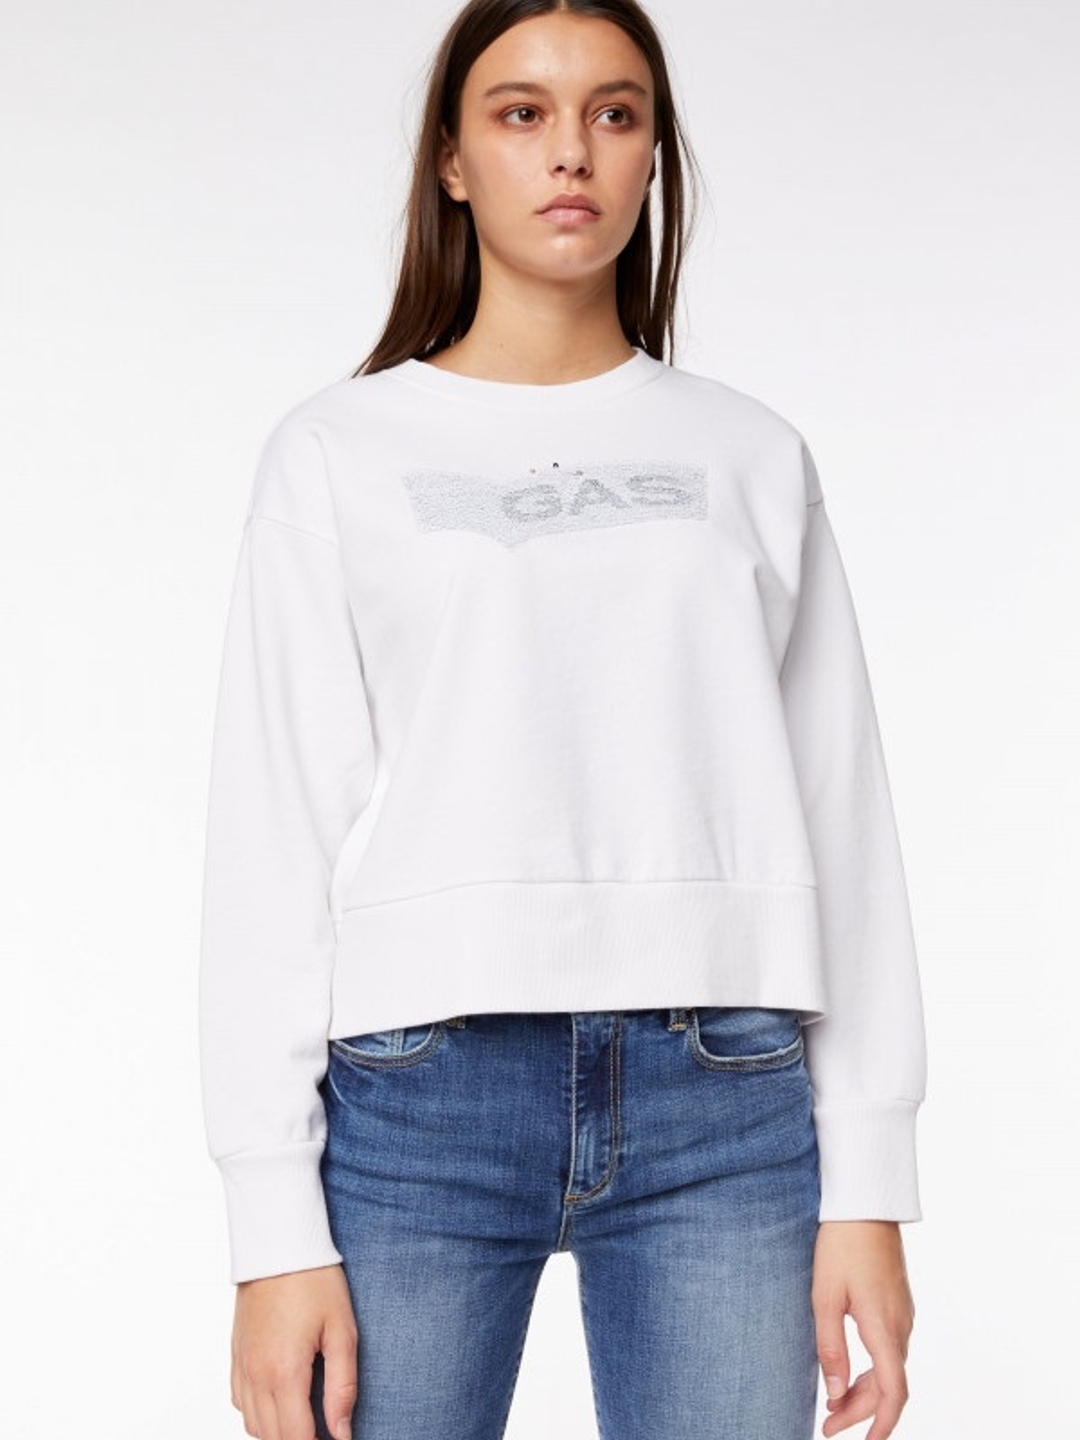 Sequinned Sweatshirt with Signature Branding